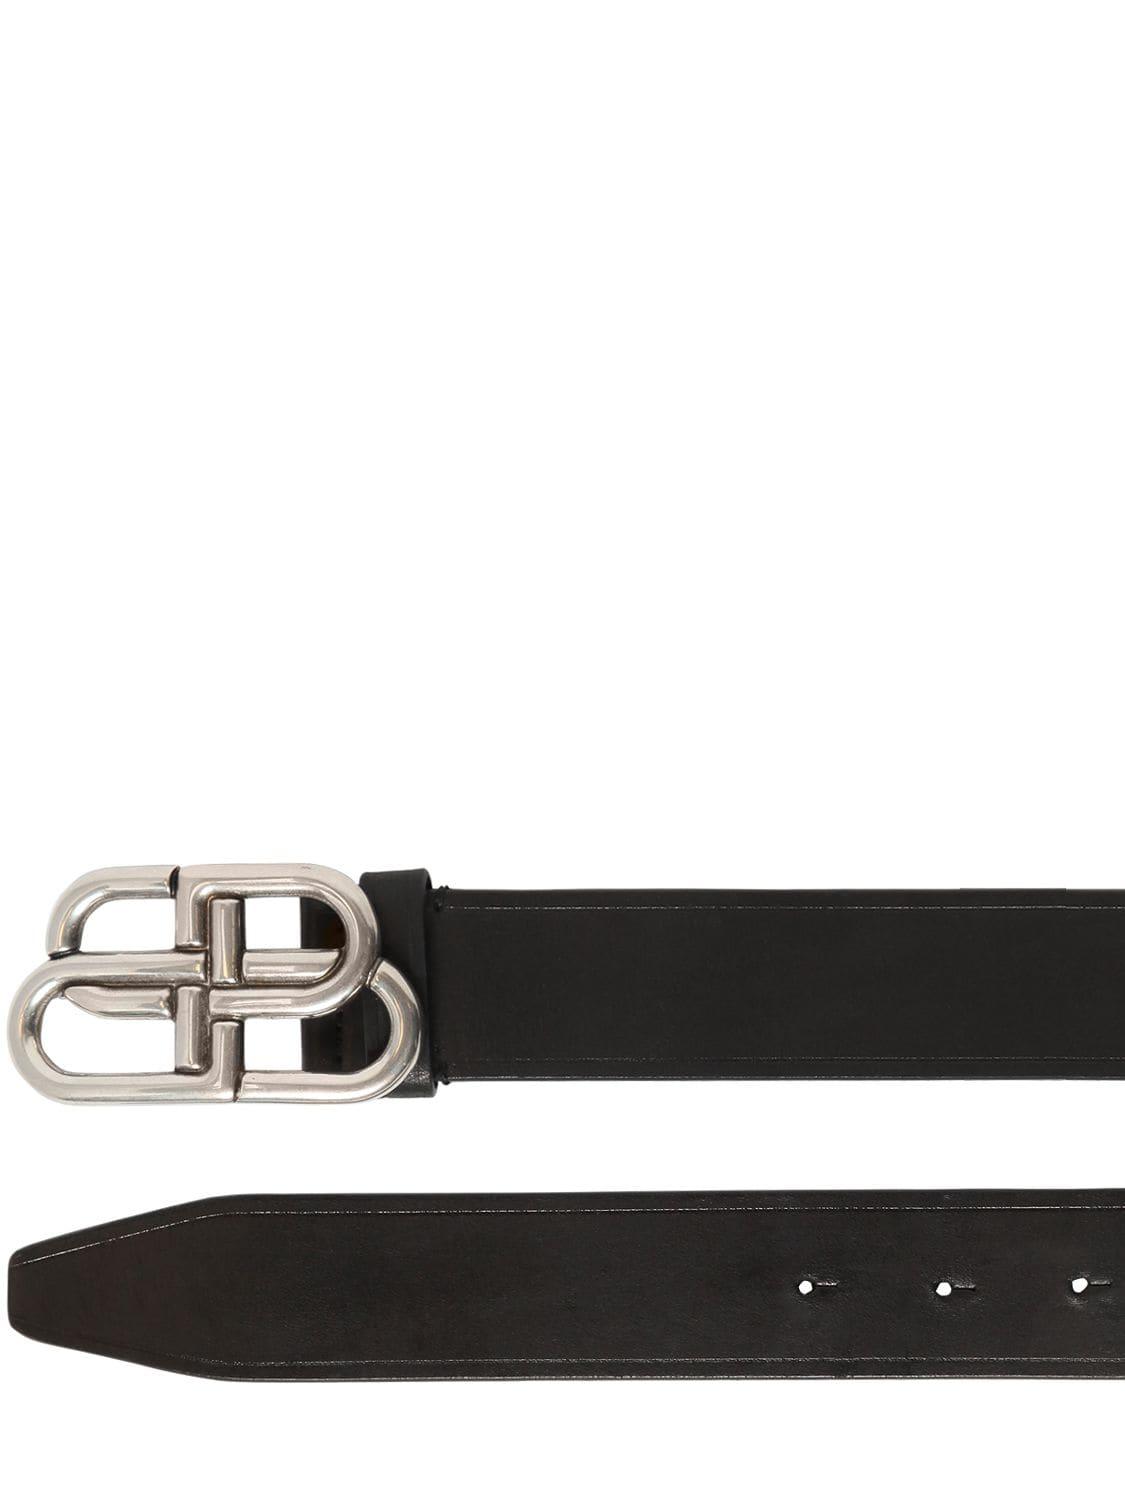 Balenciaga 45mm Large Leather Belt W/bb Logo Buckle in Black for Men - Lyst